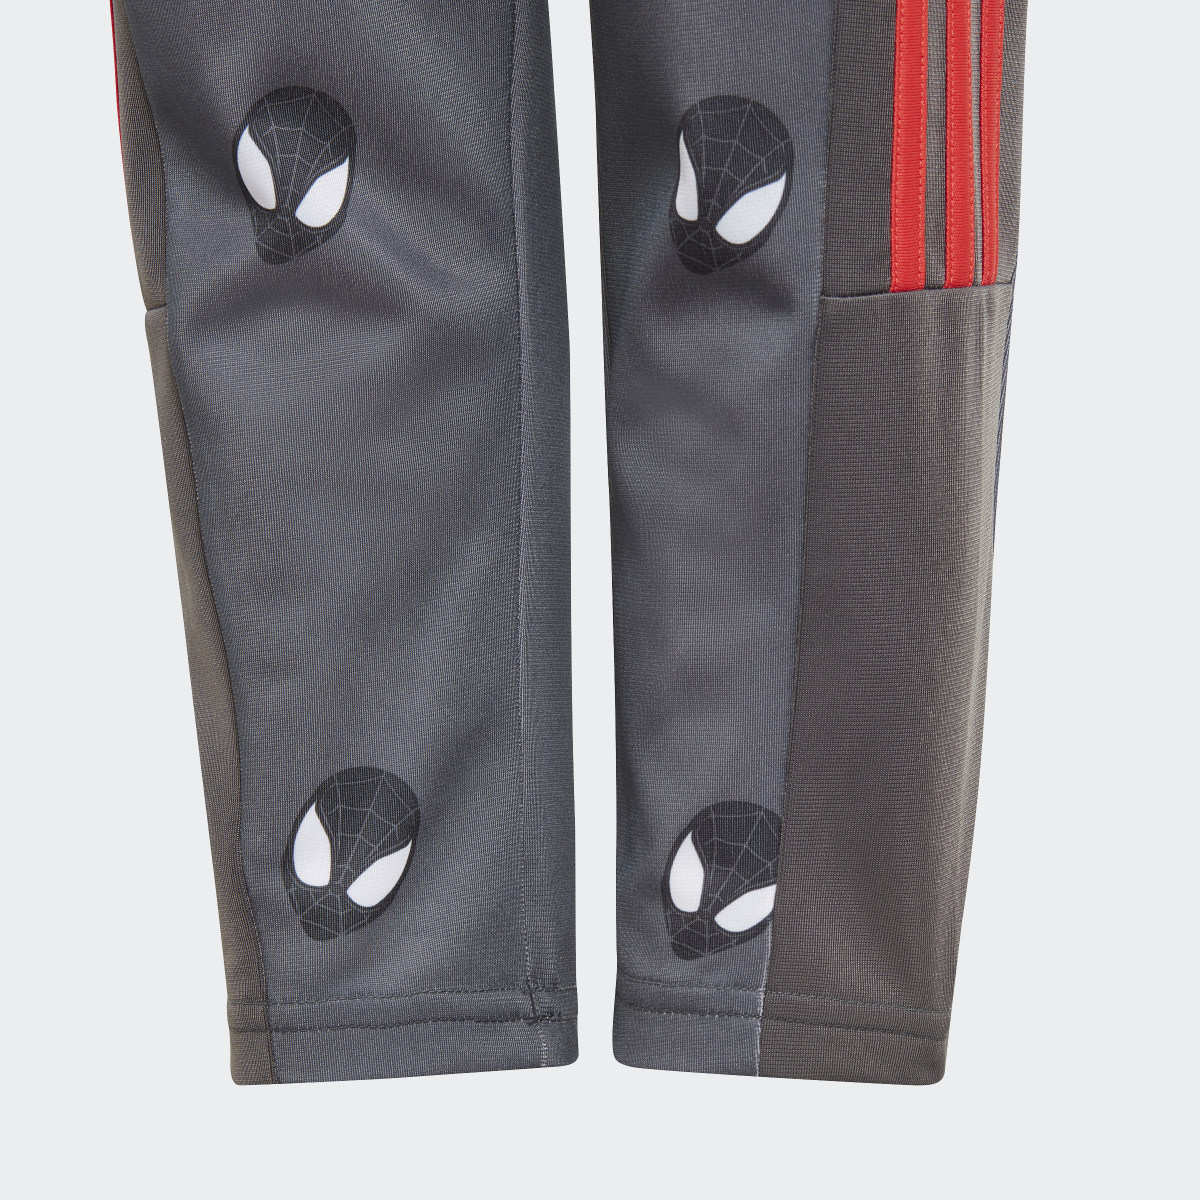 Adidas x Marvel Spider-Man Pants. 5